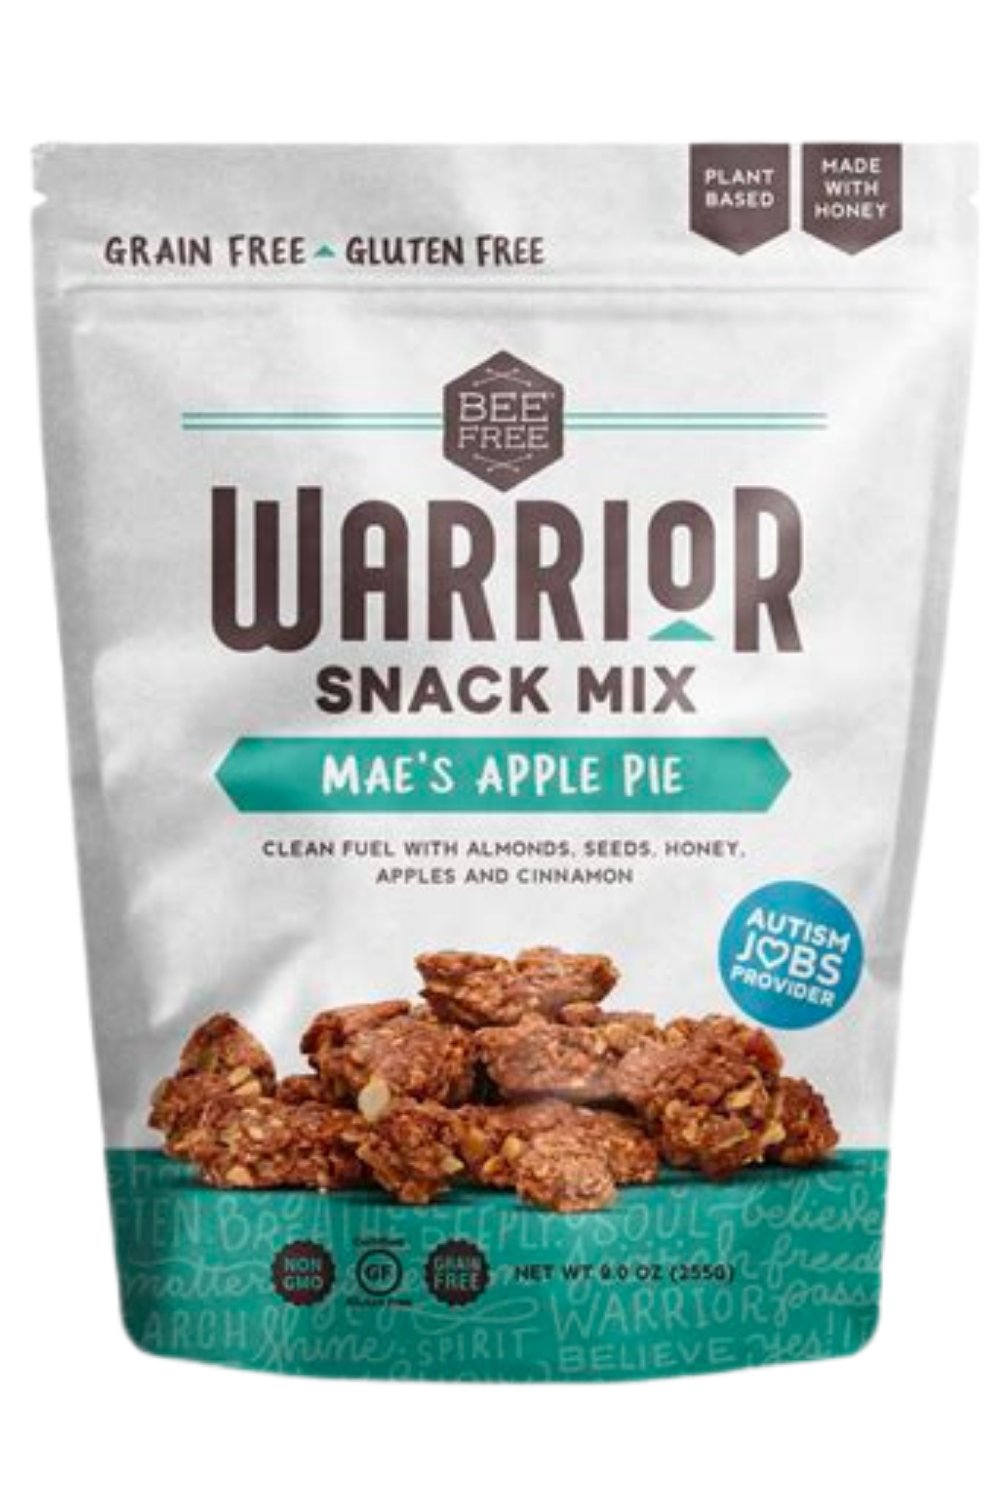 Warrior Snack Mix- "Mae's Apple Pie" WARRIOR MIX, Apple Pie snack mix by Top Of Island, 9 oz bag